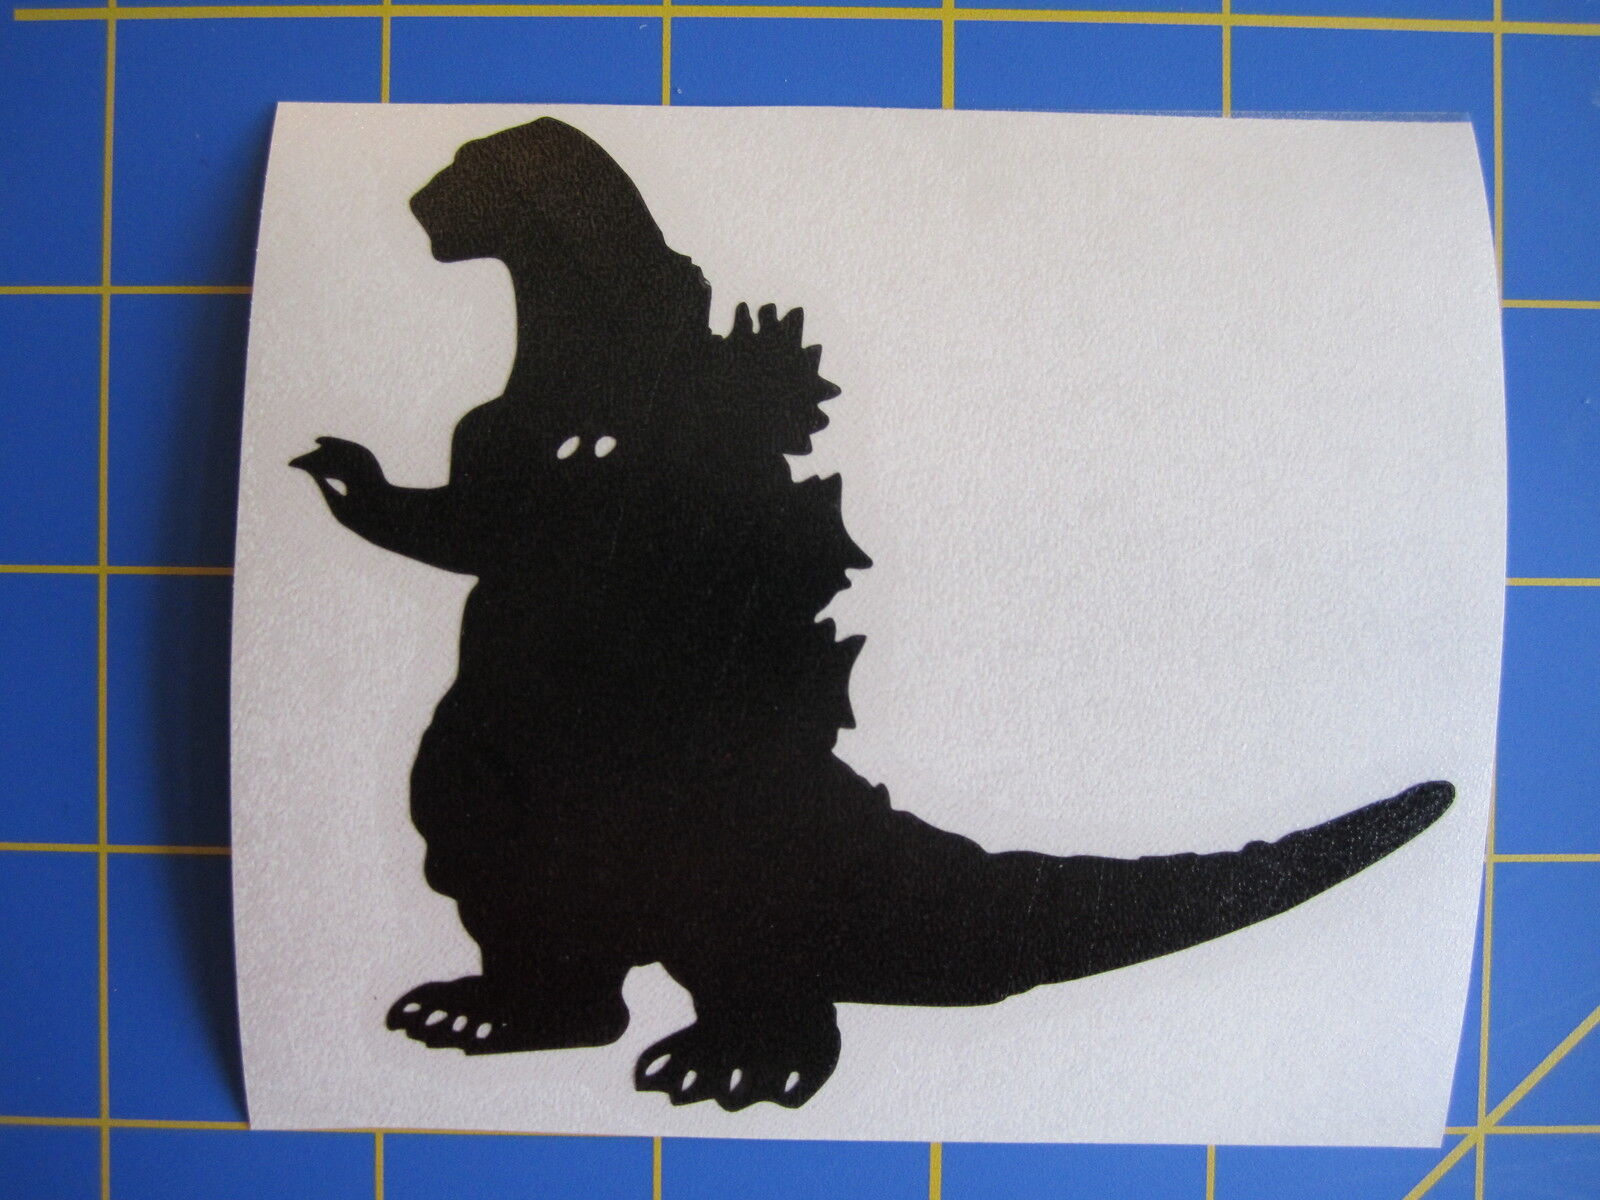 Godzilla 50s Silhouette Vinyl Decal - Sticker  3.5x4 - Any Color